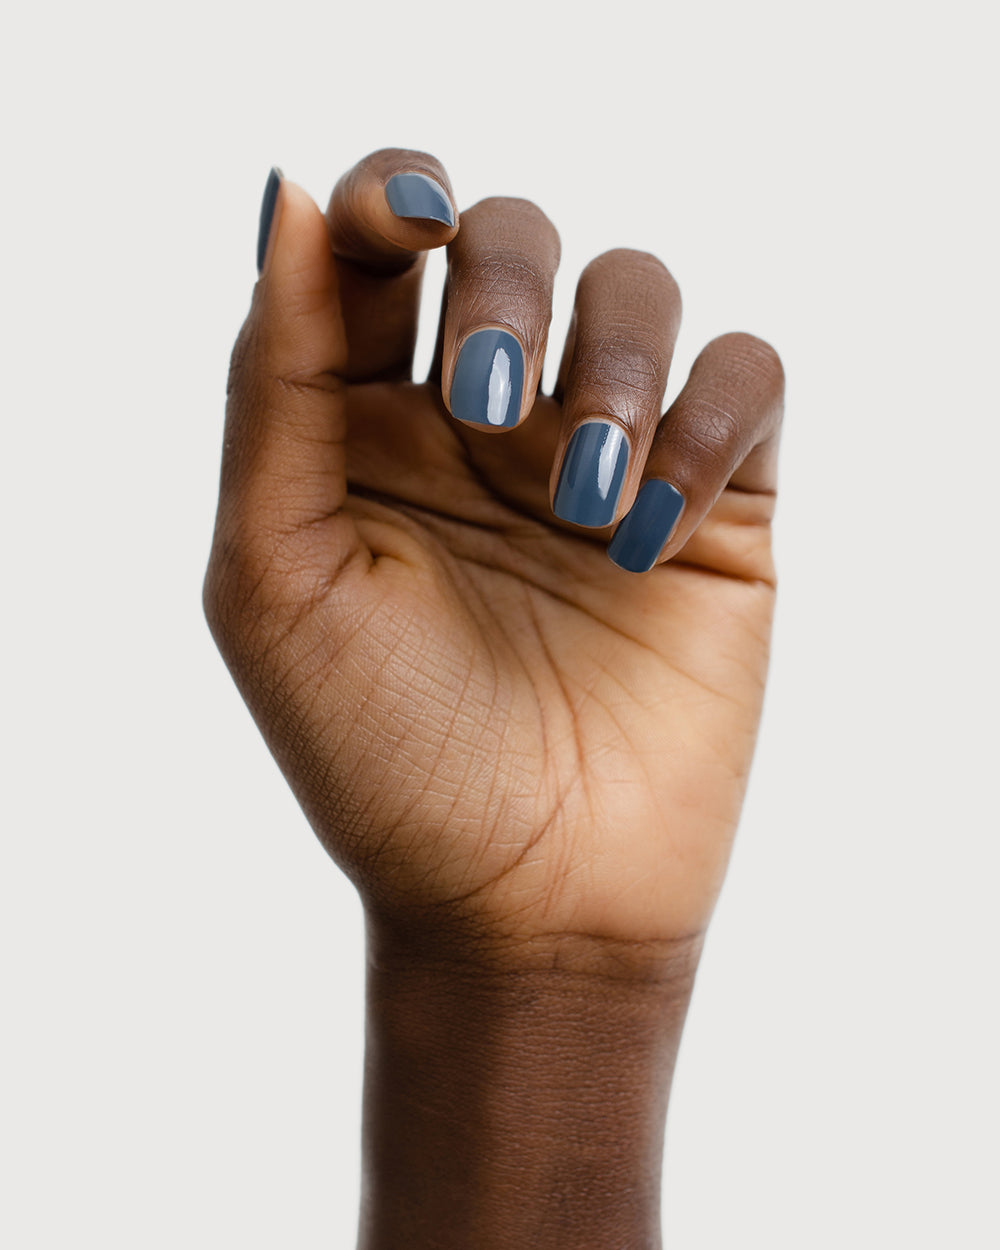 Dark granite blue-grey nail polish hand swatch on dark skin tone